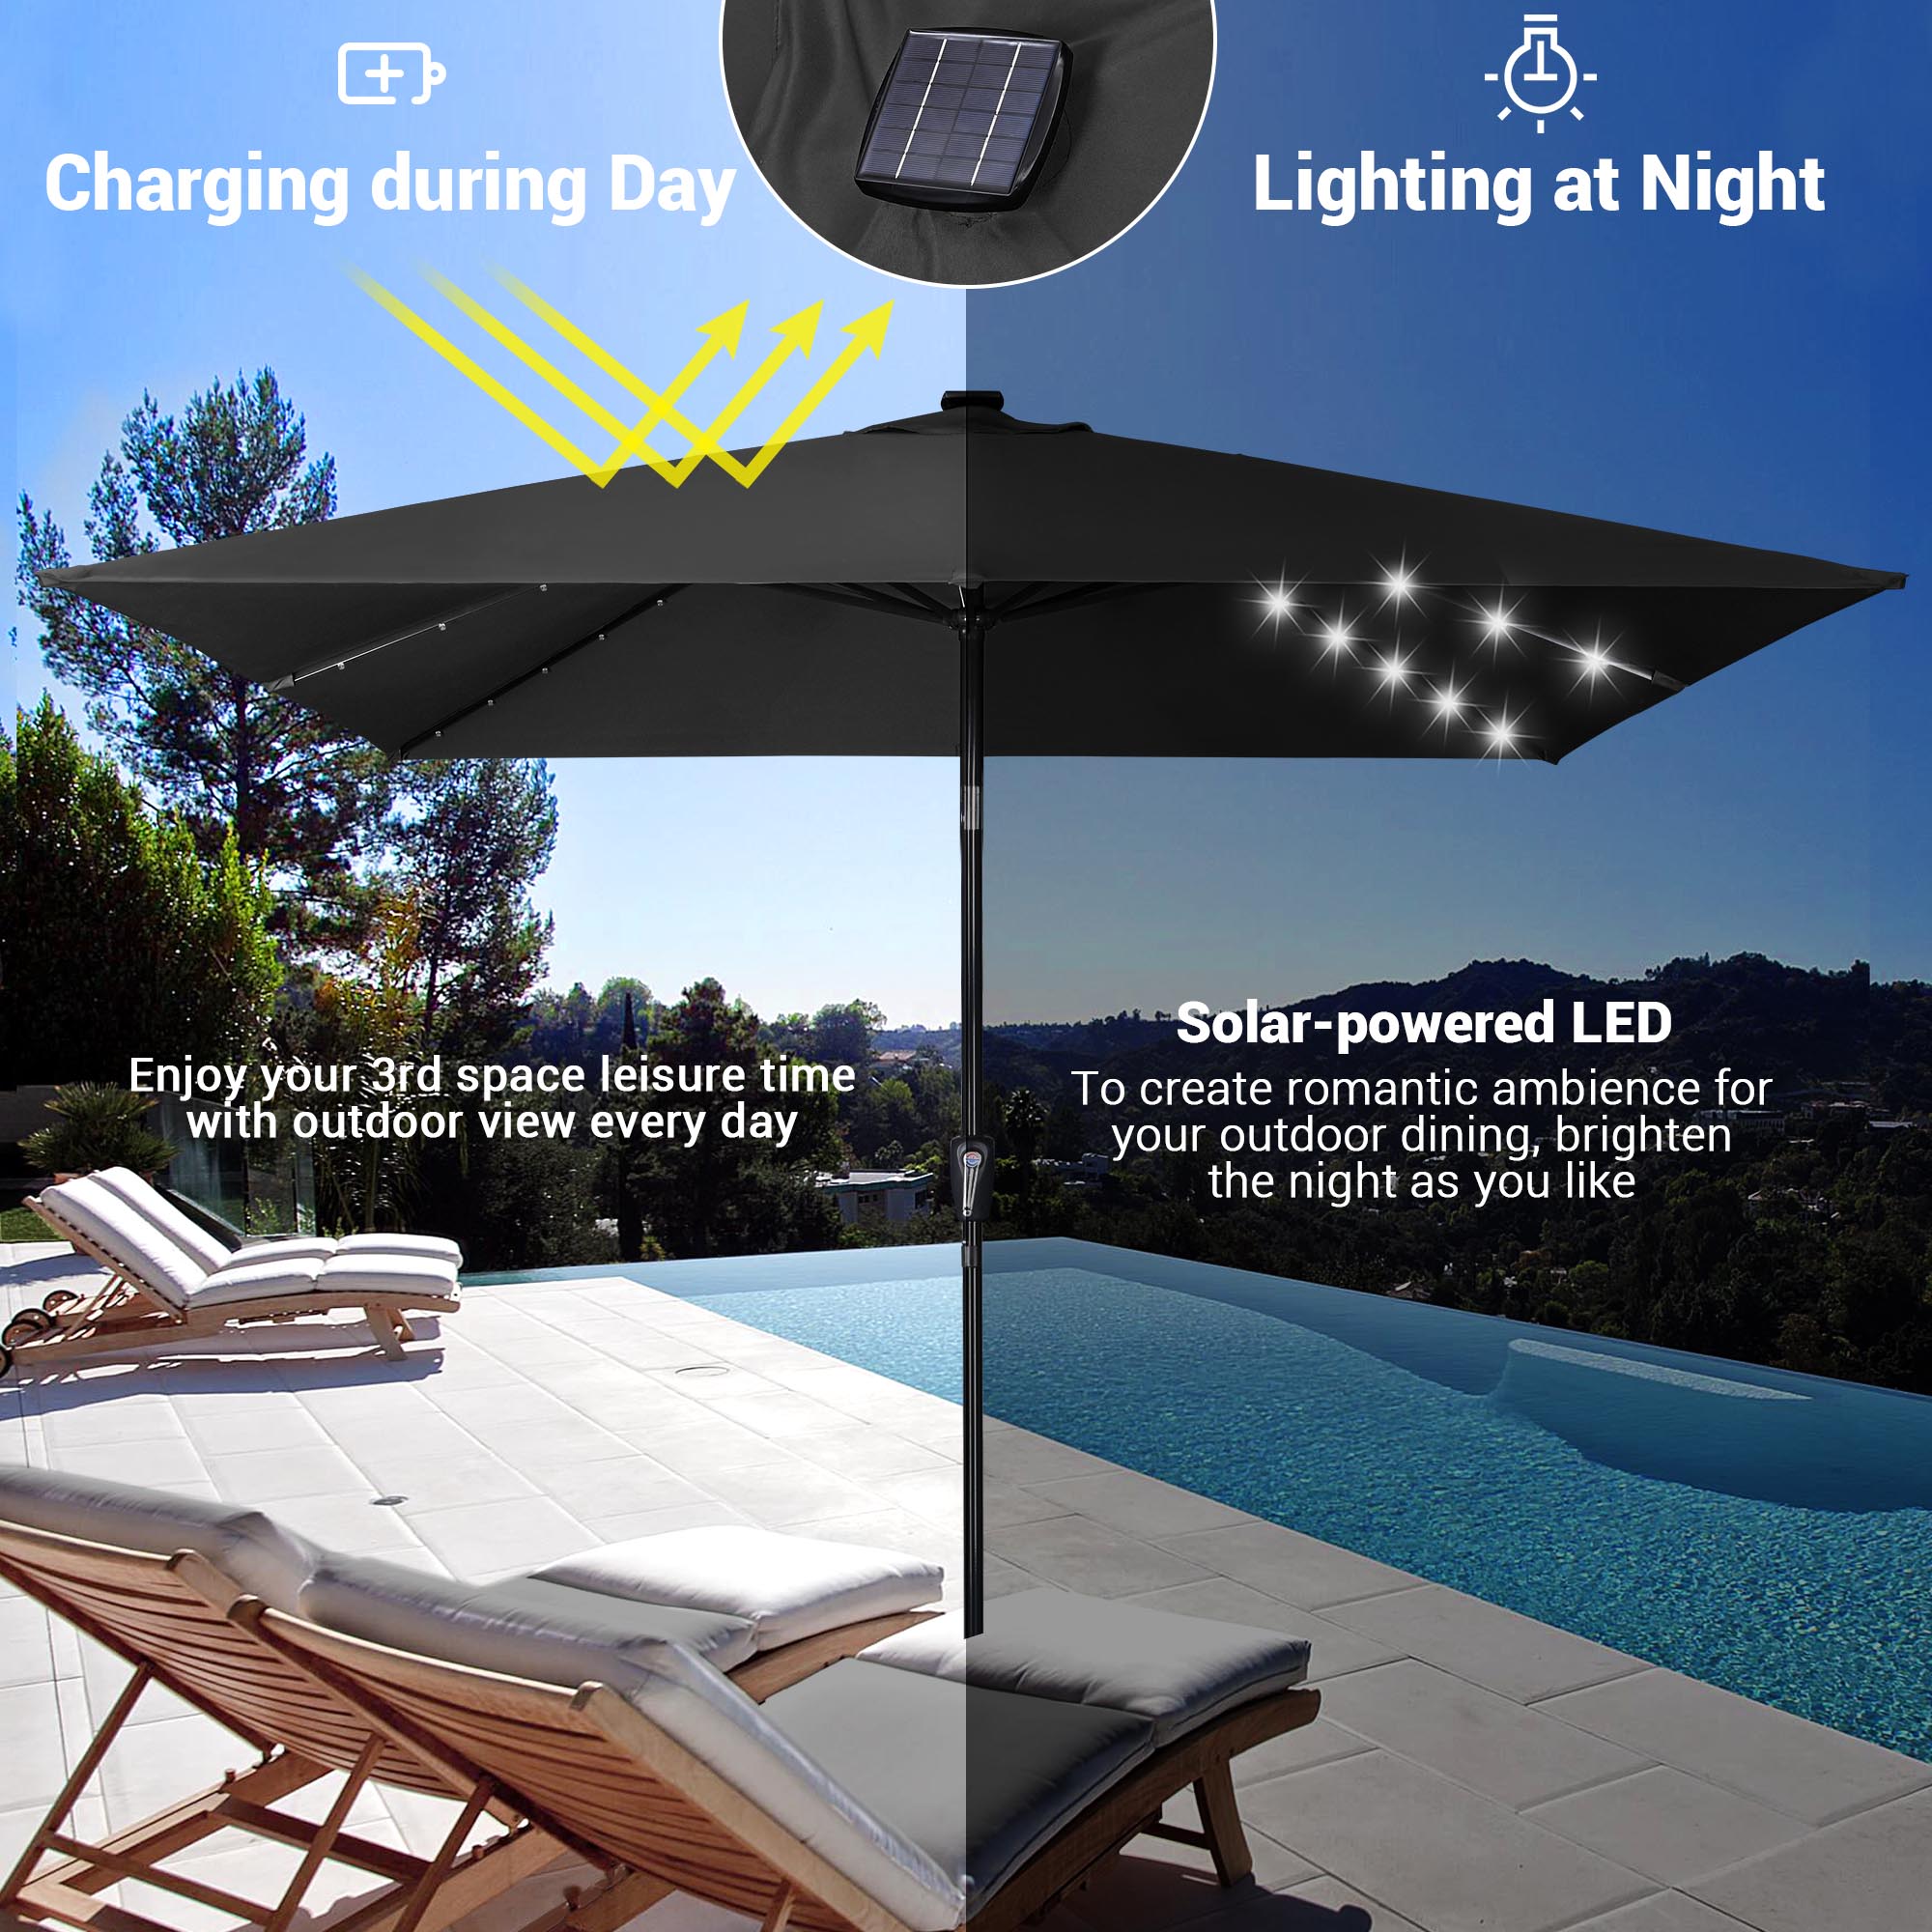 LAGarden 10x10 Ft LED Light Patio Umbrella Solar Power 8-Rib Tilt Aluminum for Outdoor Yard Table, USB Port Black